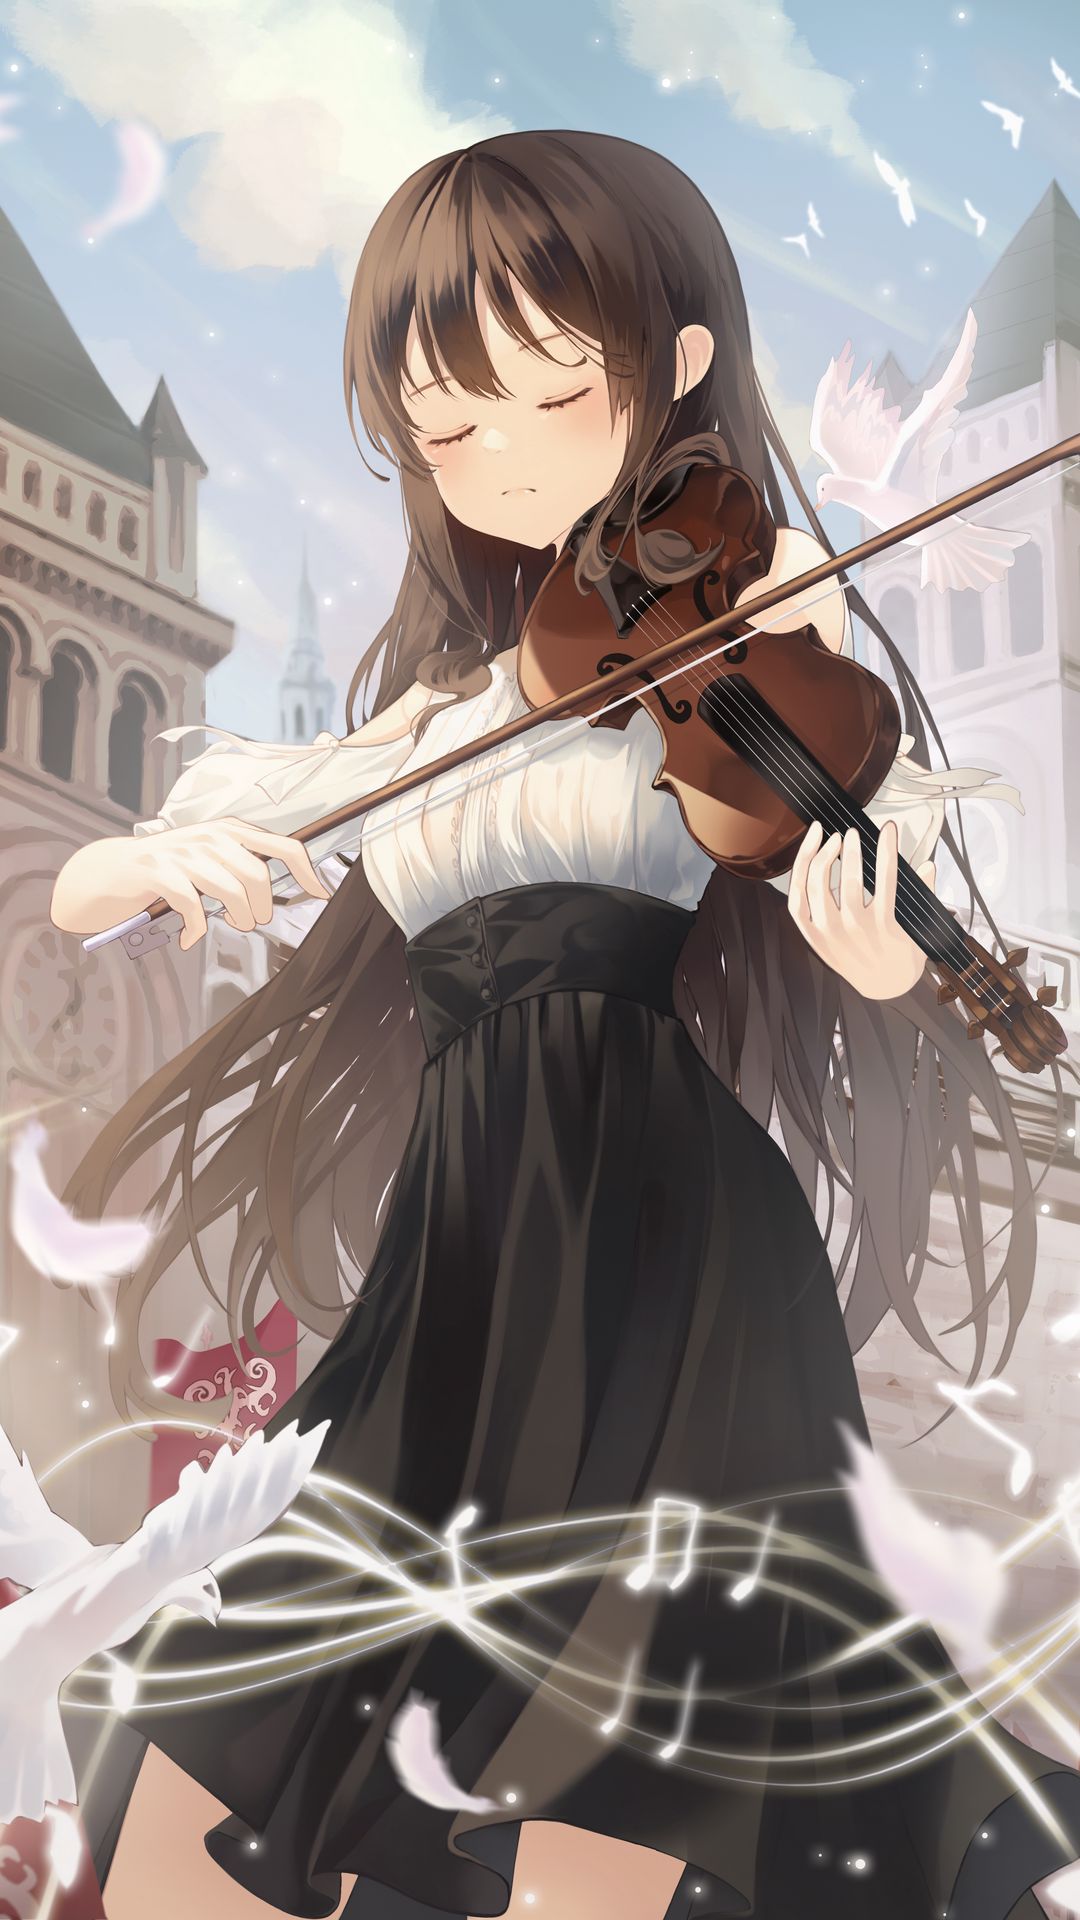 Download Wallpaper 1080x19 Girl Violin Music Anime Samsung Galaxy S4 S5 Note Sony Xperia Z Z1 Z2 Z3 Htc One Lenovo Vibe Hd Background